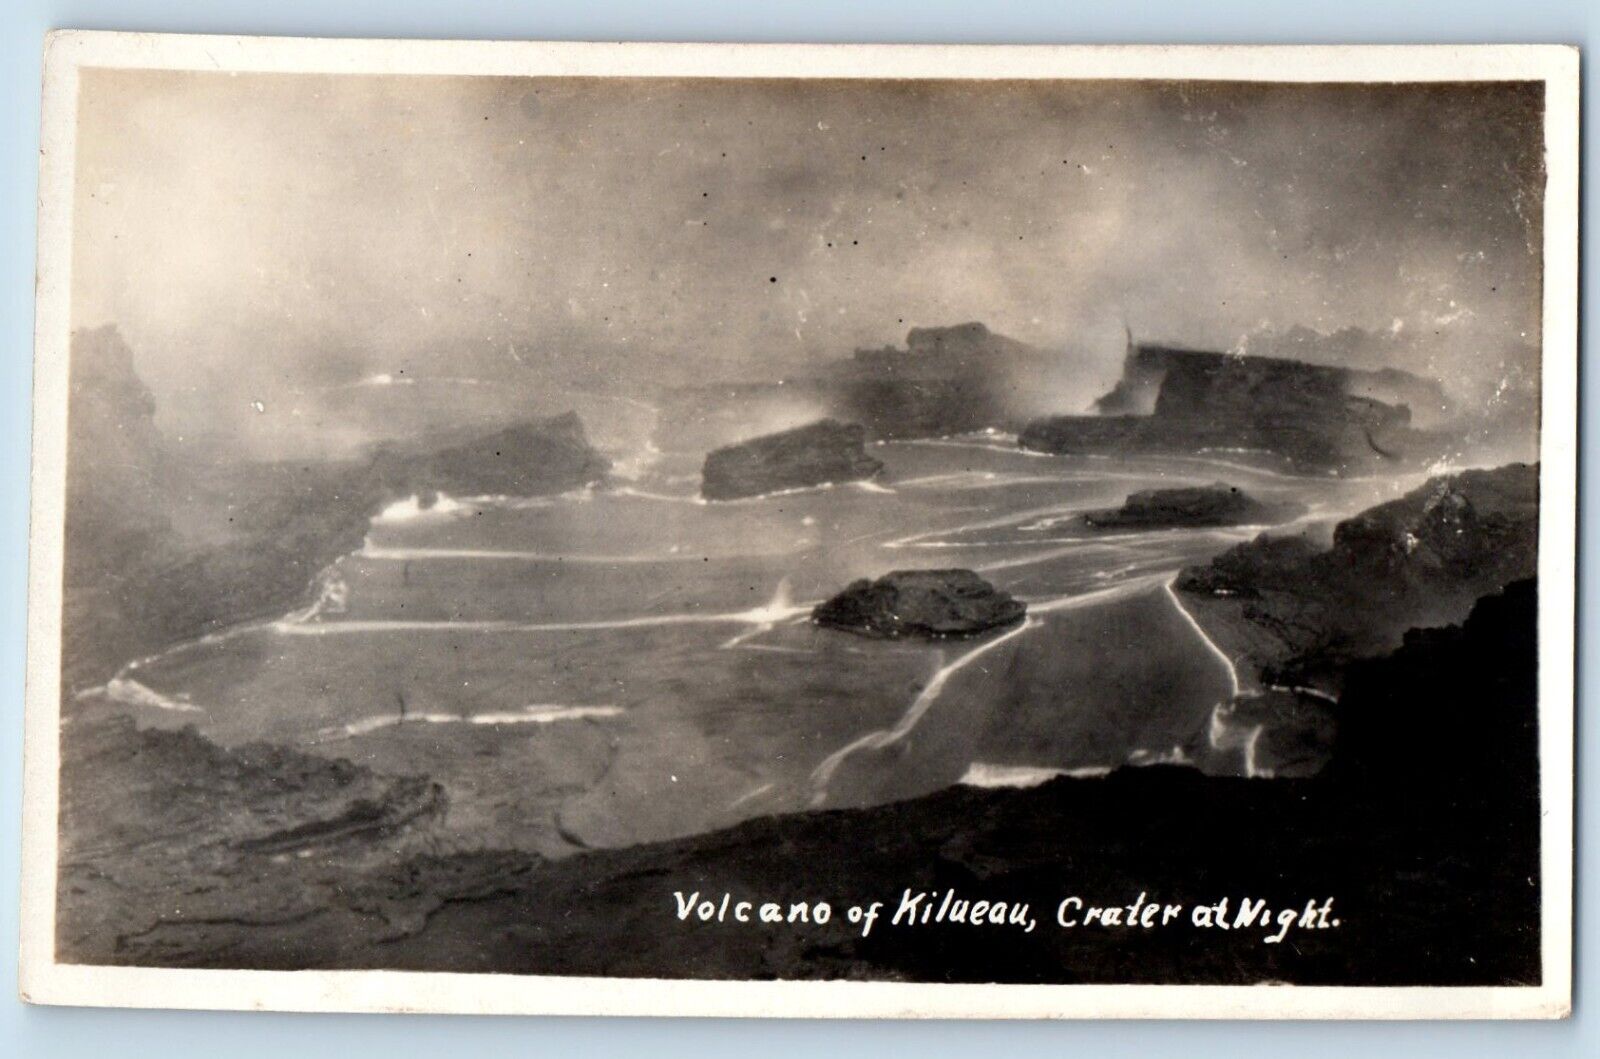 Hawaii HI Postcard RPPC Photo Volcano Of Kilueau Crater At Night c1910's Antique